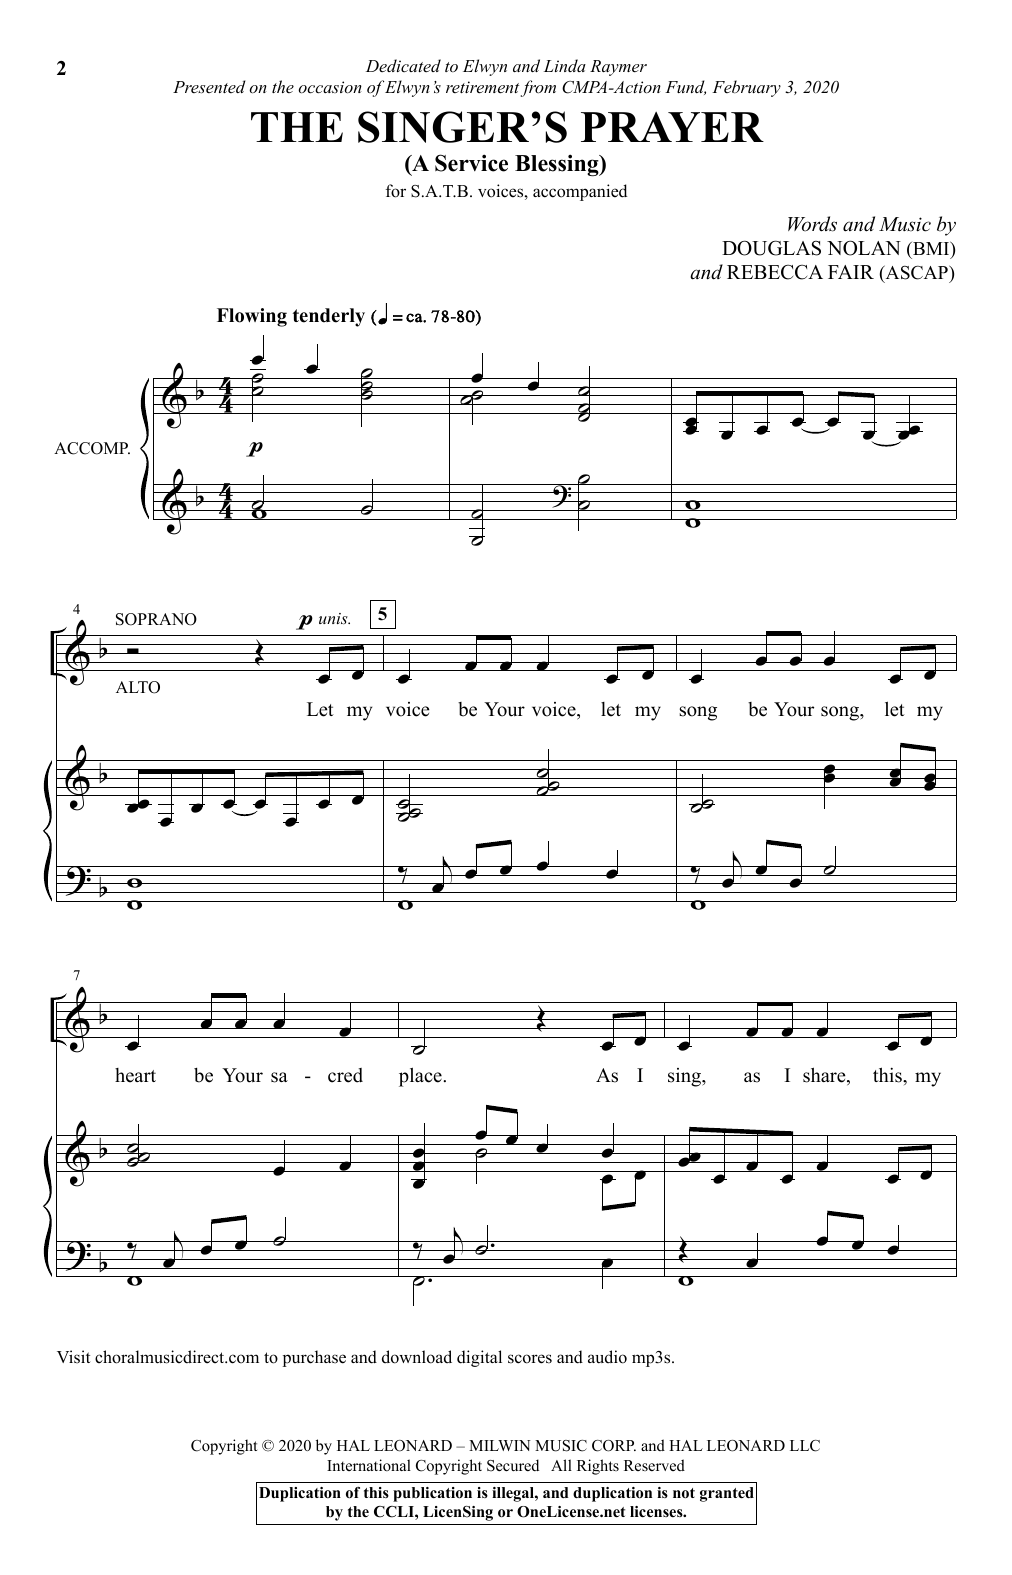 Douglas Nolan & Rebecca Fair The Singer's Prayer (arr. Douglas Nolan) Sheet Music Notes & Chords for SATB Choir - Download or Print PDF